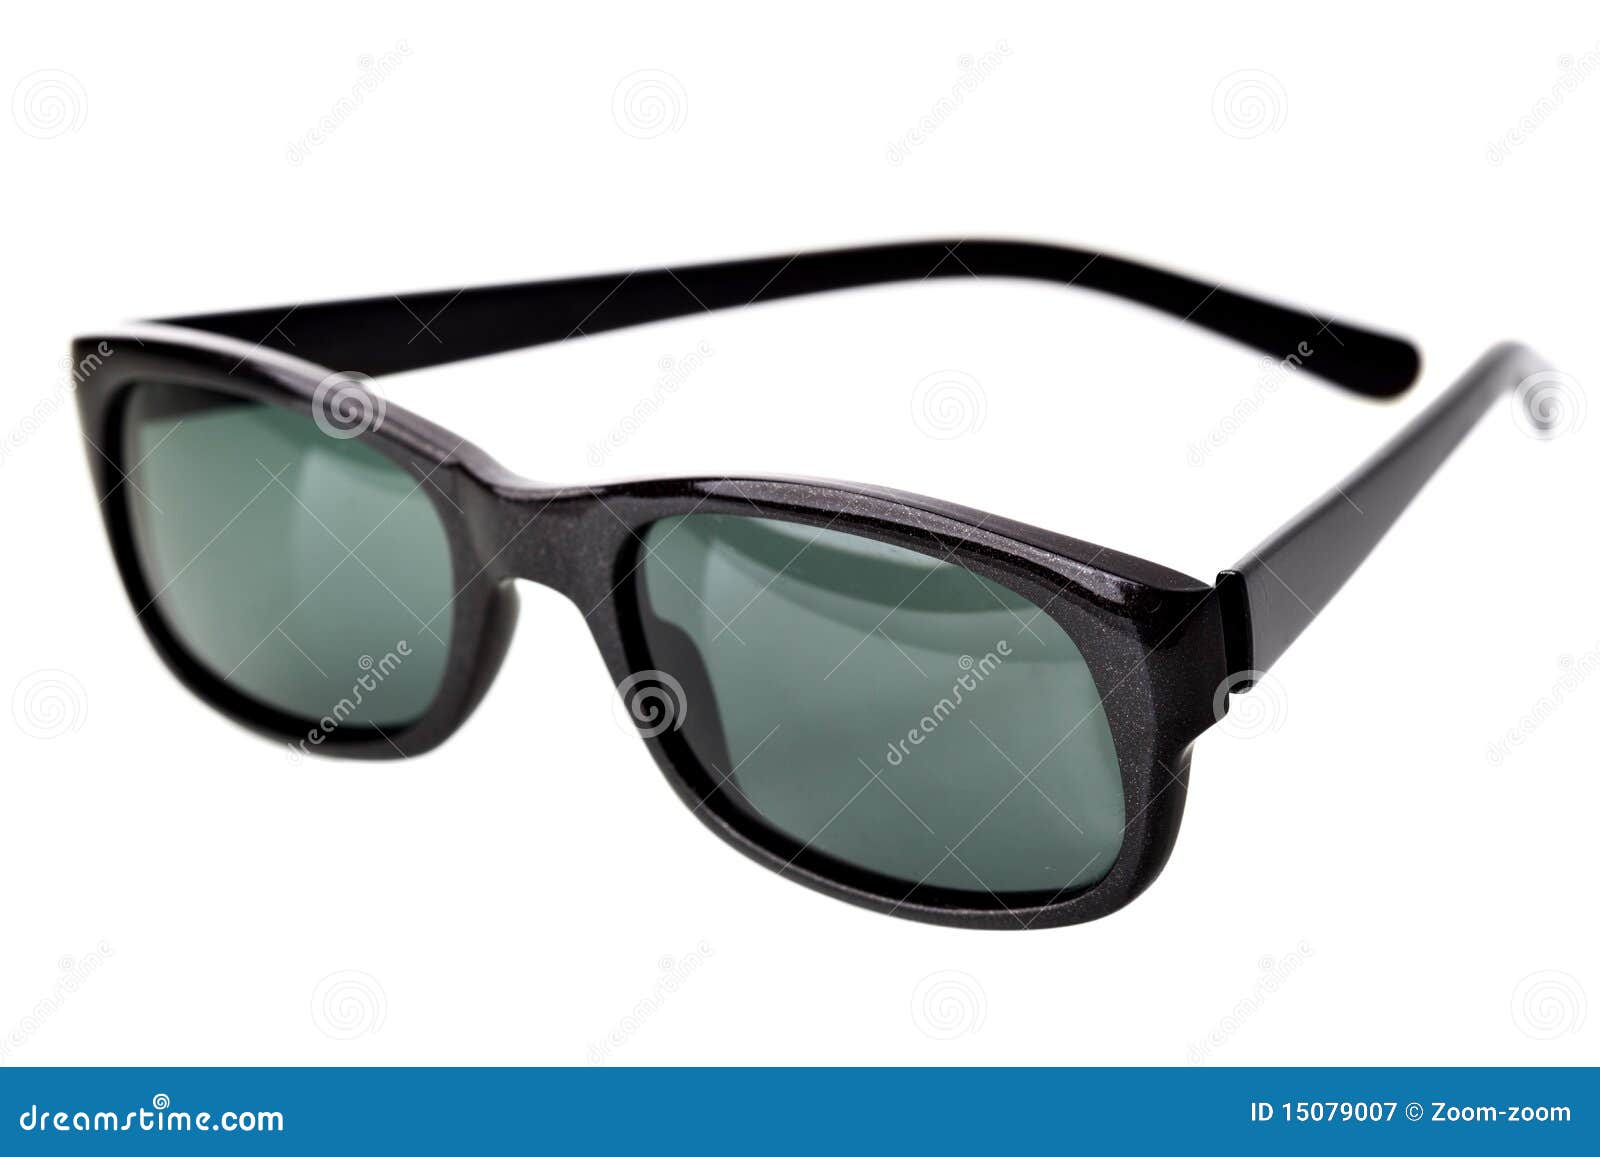 Black sunglasses stock image. Image of model, health - 15079007